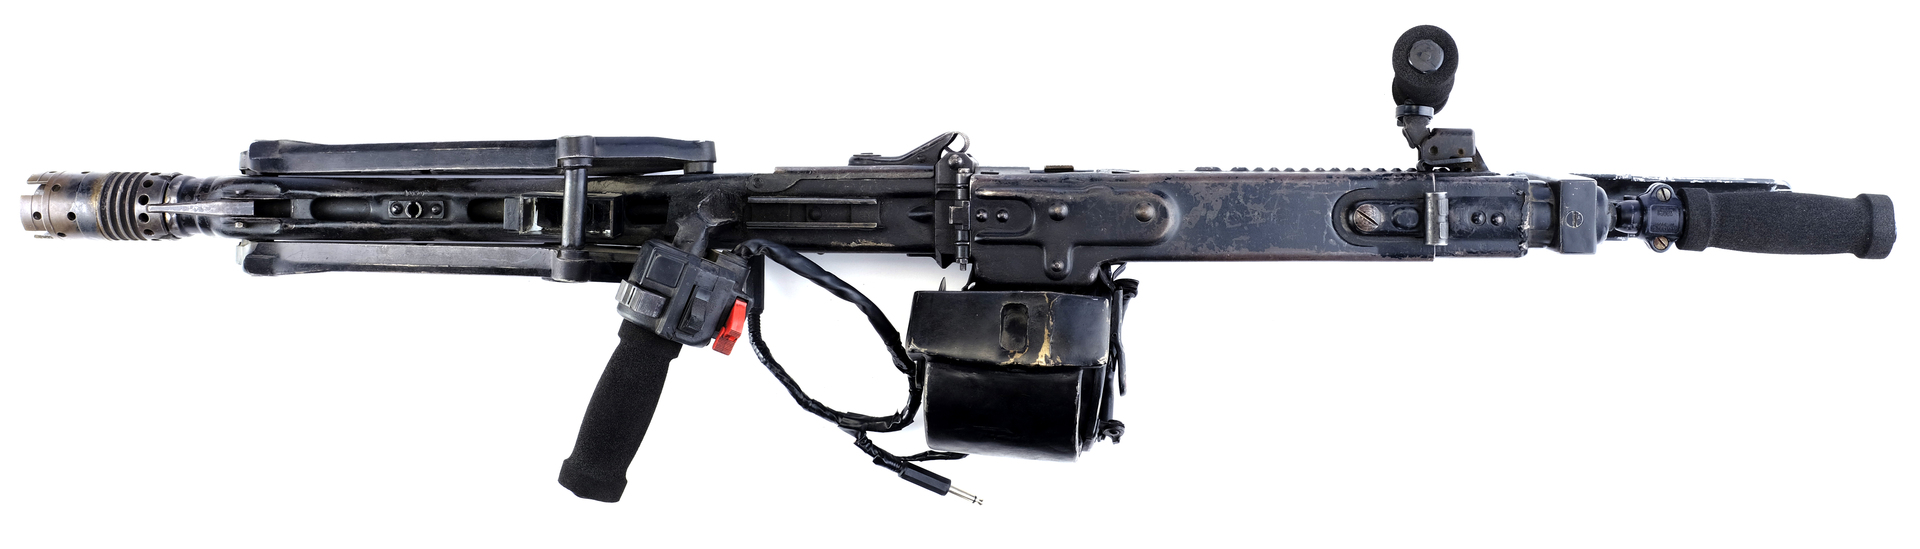 ALIENS - M56 Smartgun - Image 19 of 33